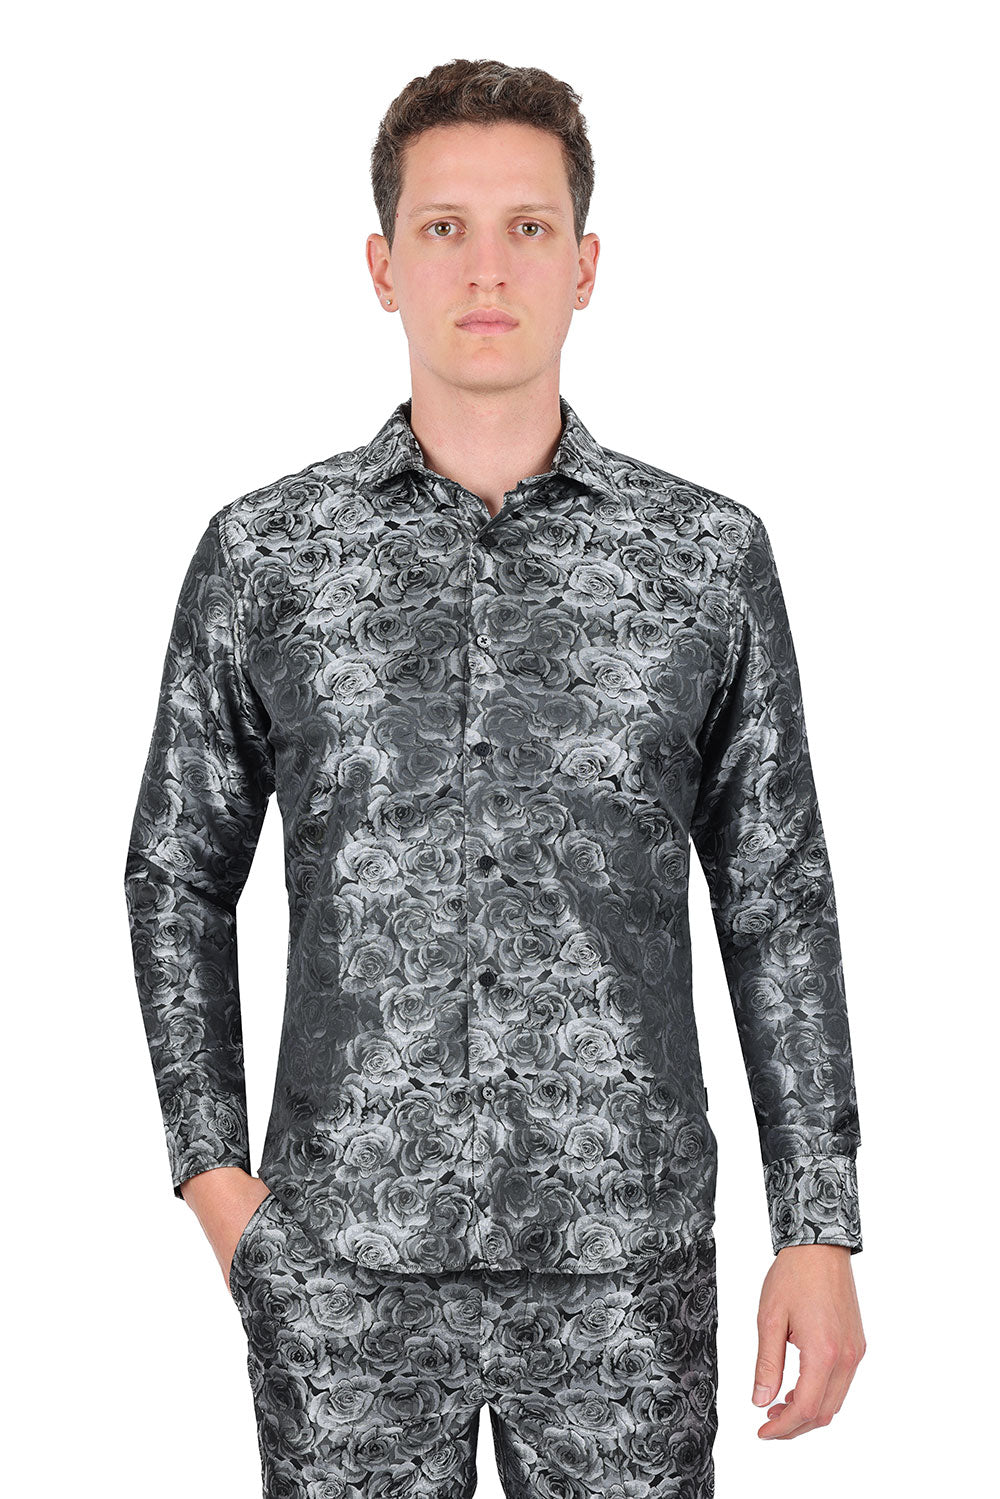 Barabas Long Sleeve Floral Men's Button Down Dress Shirts 2B03 Gray